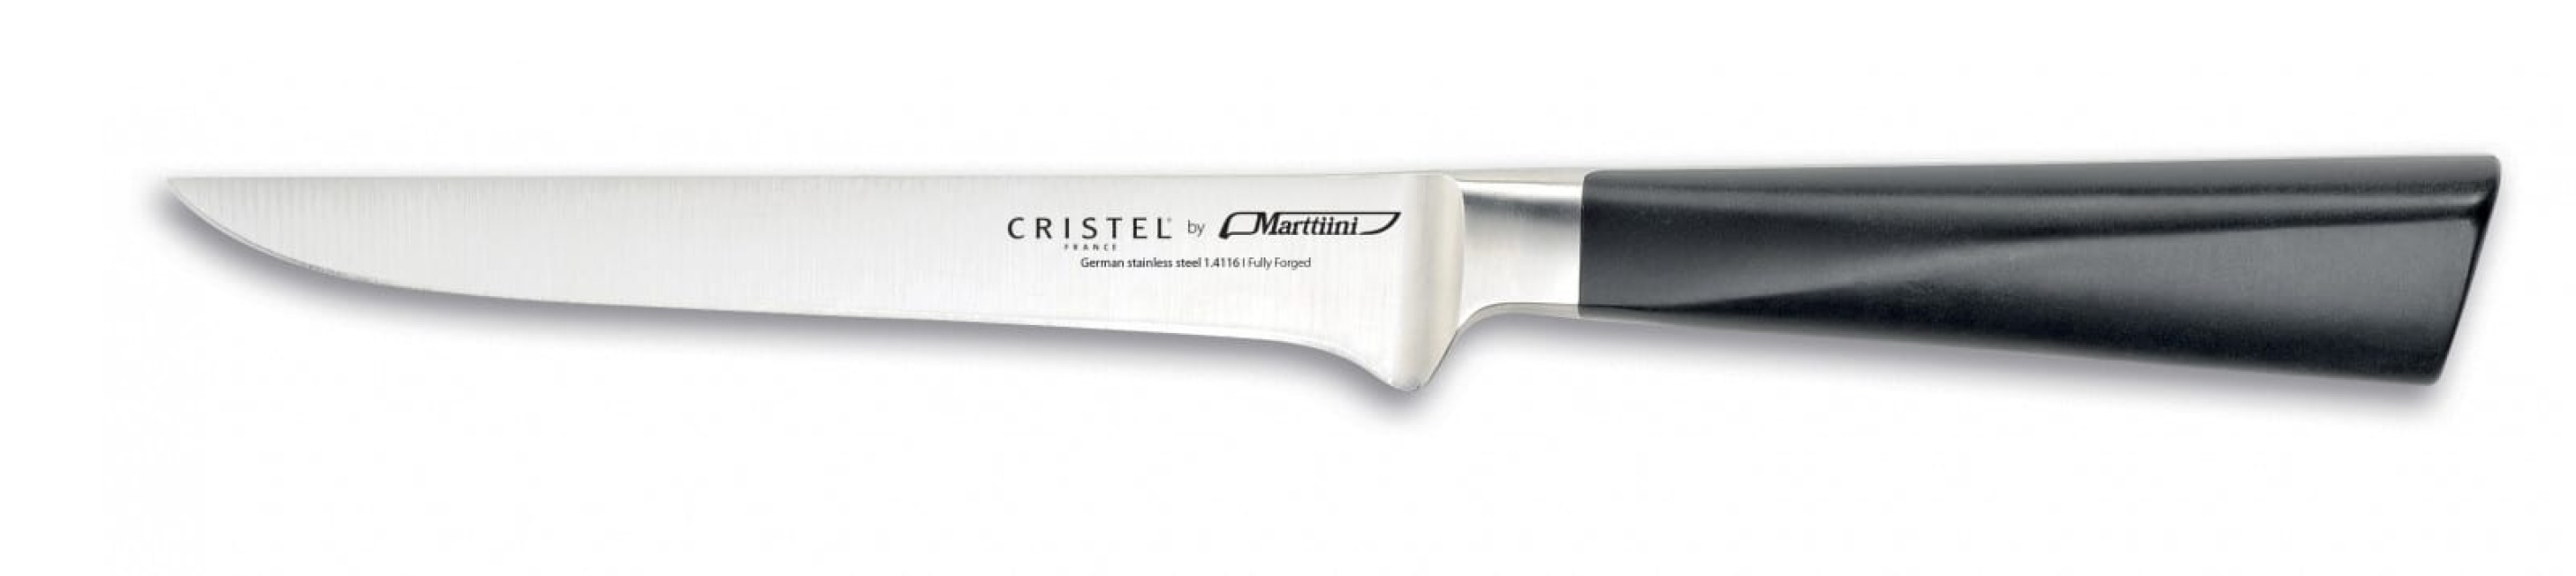 Utbeningskniv, 15 cm - Cristel